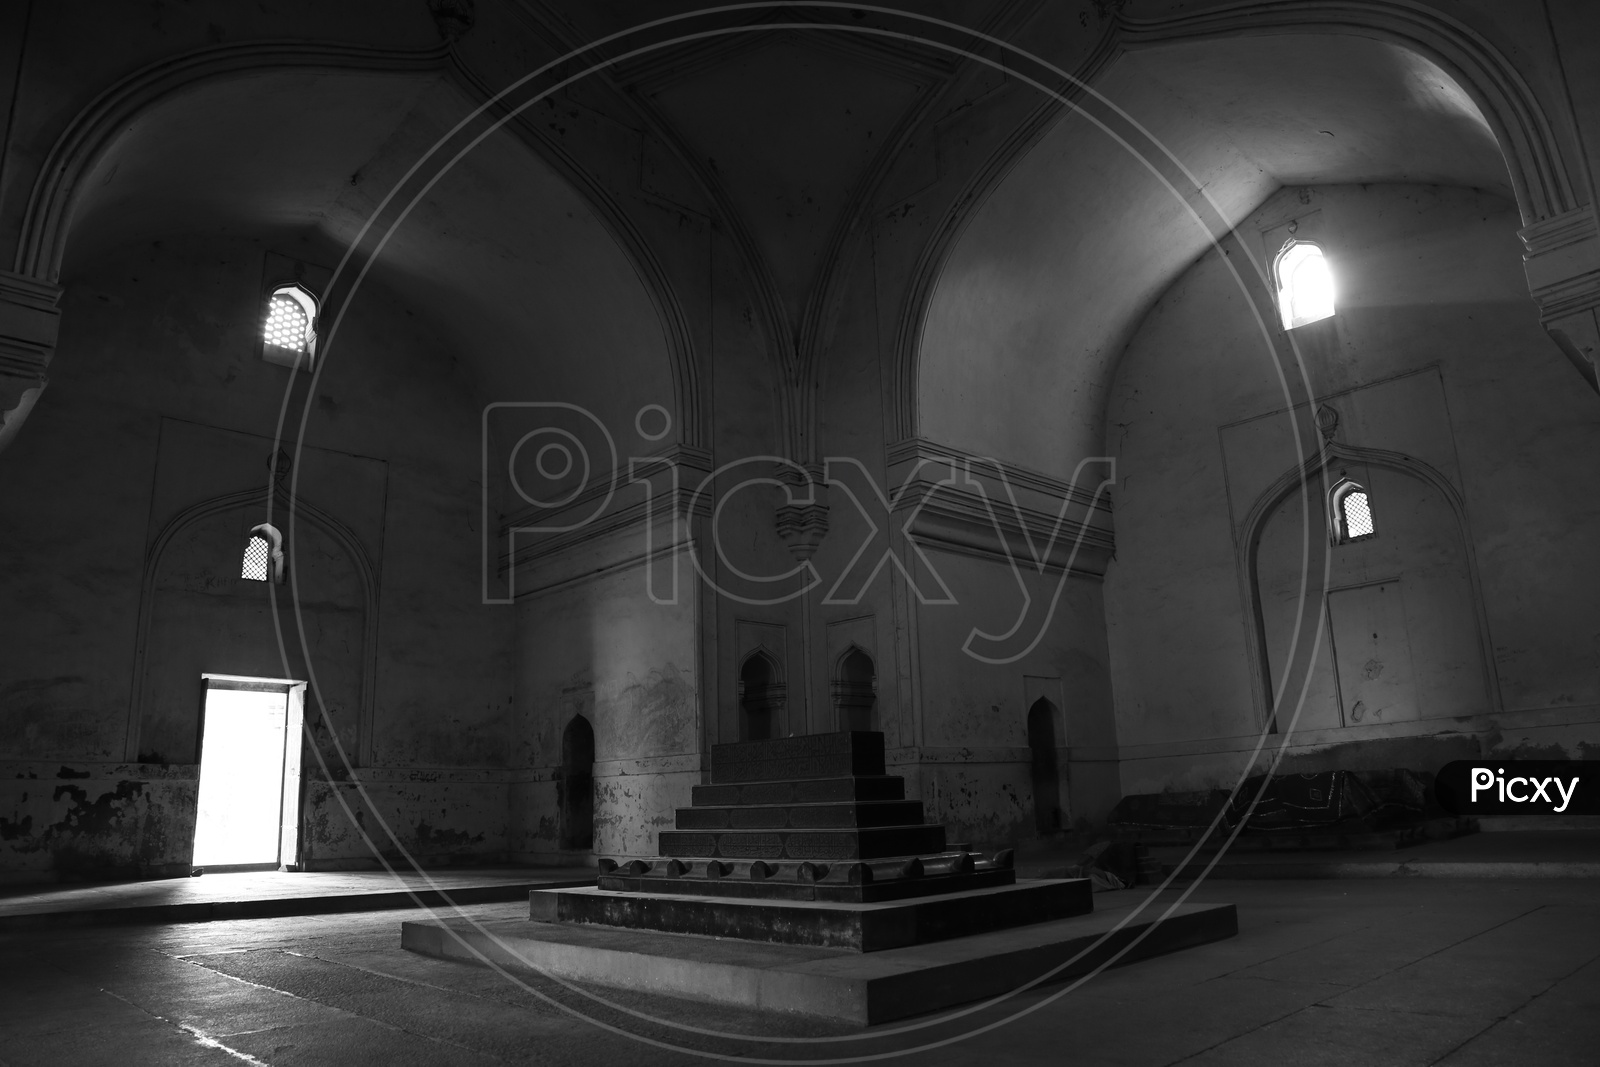 Architecture Of Qutub Shahi Tomb  Interior View